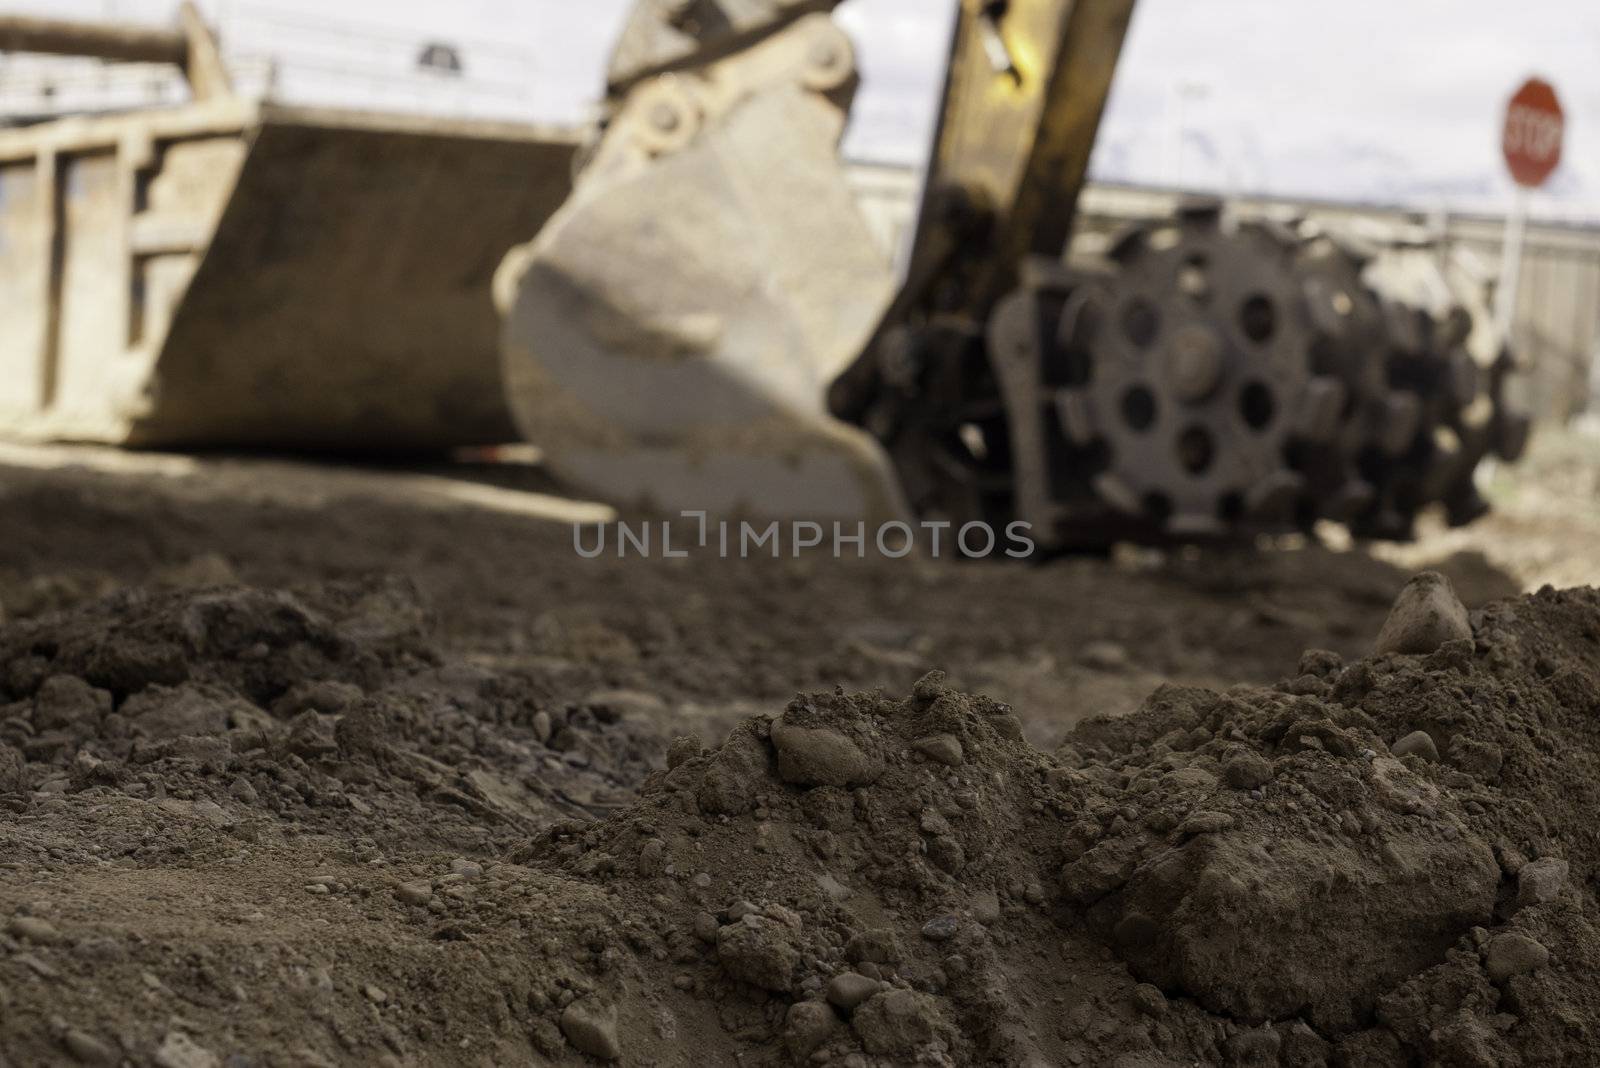 dirt, soil, construction equipment in background